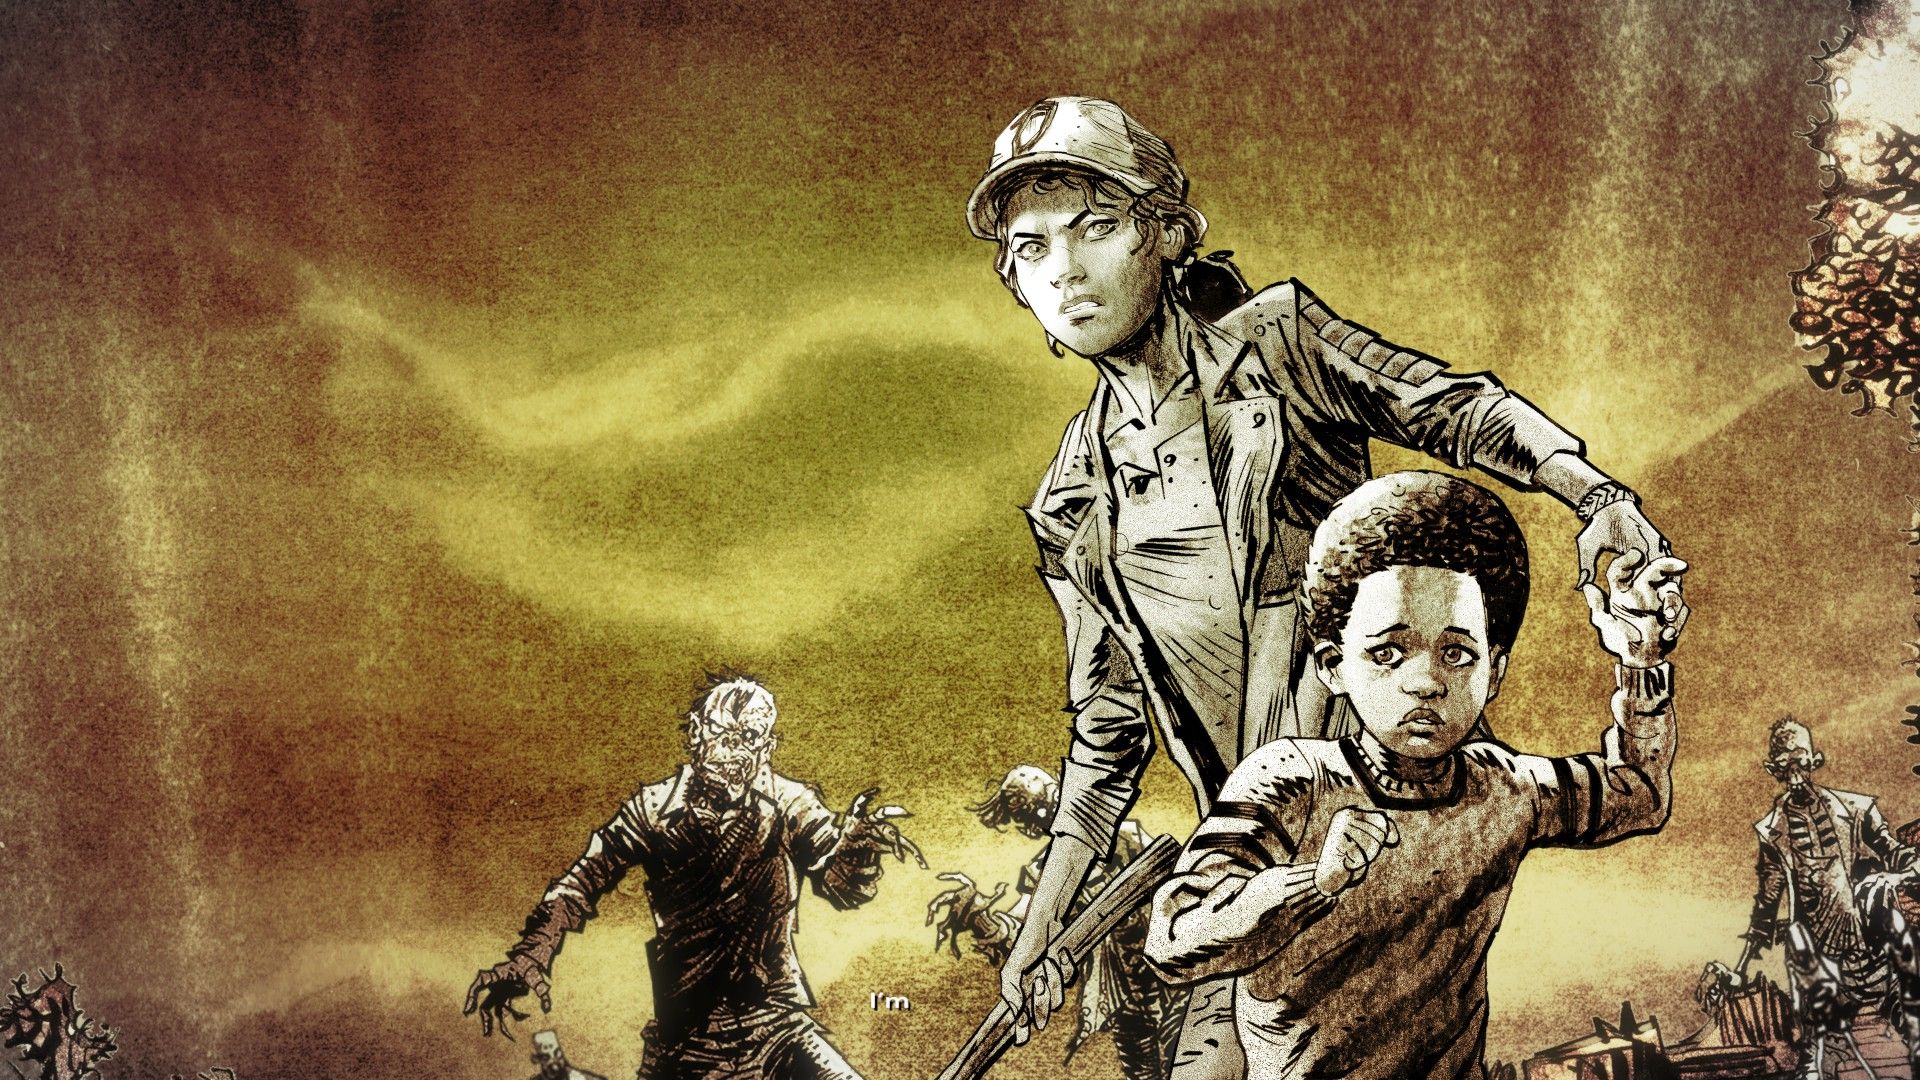 The Walking Dead: The Final Season 1 Review